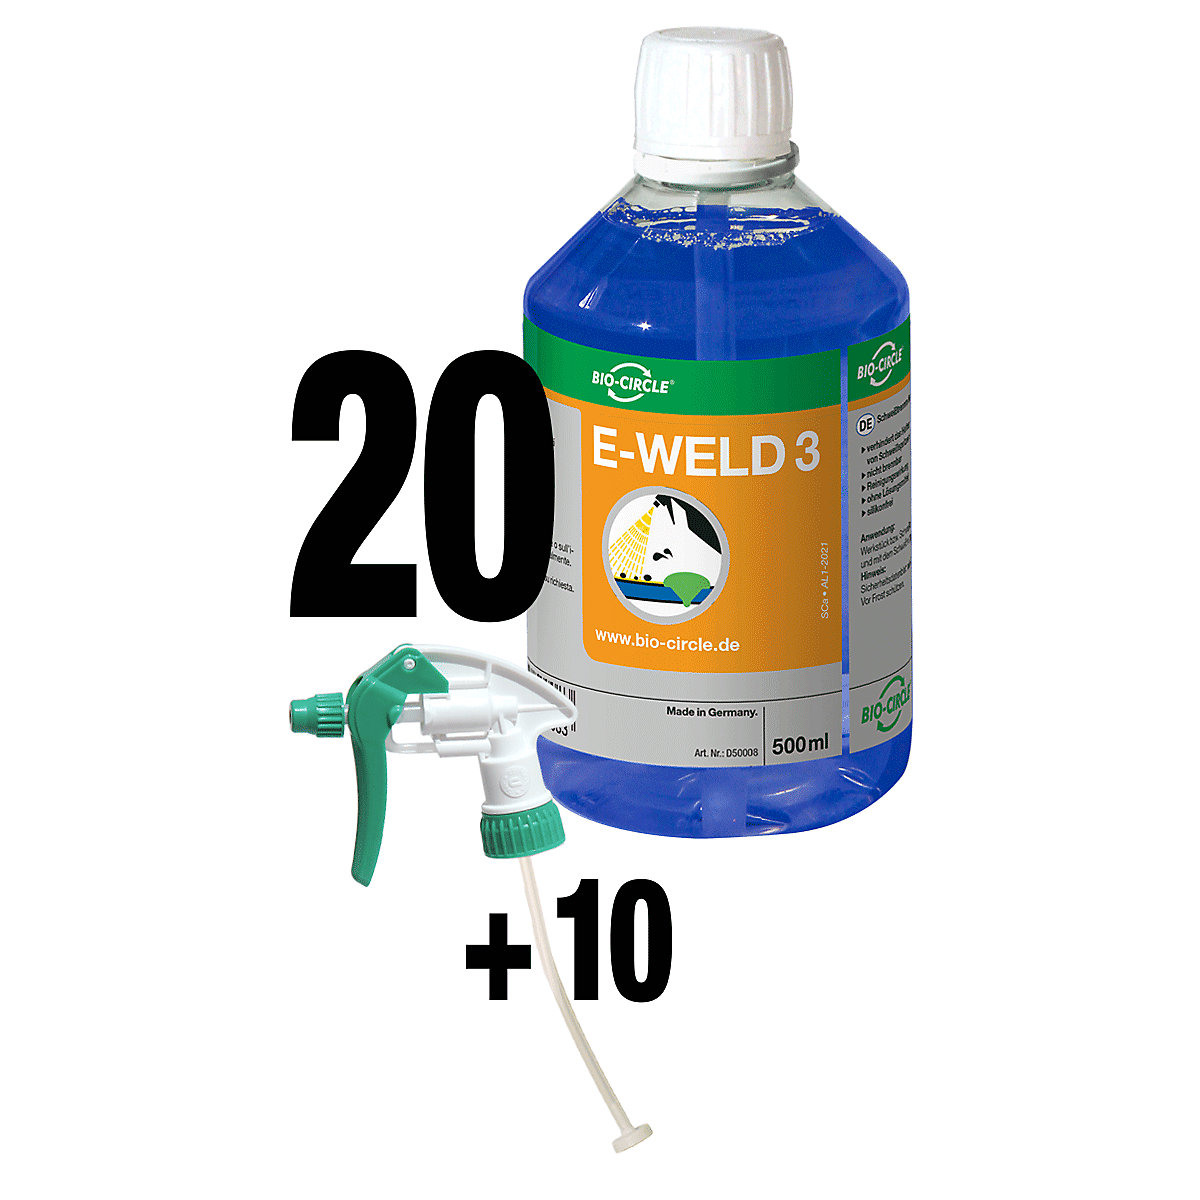 E-WELD 3 welding protection spray - Bio-Circle